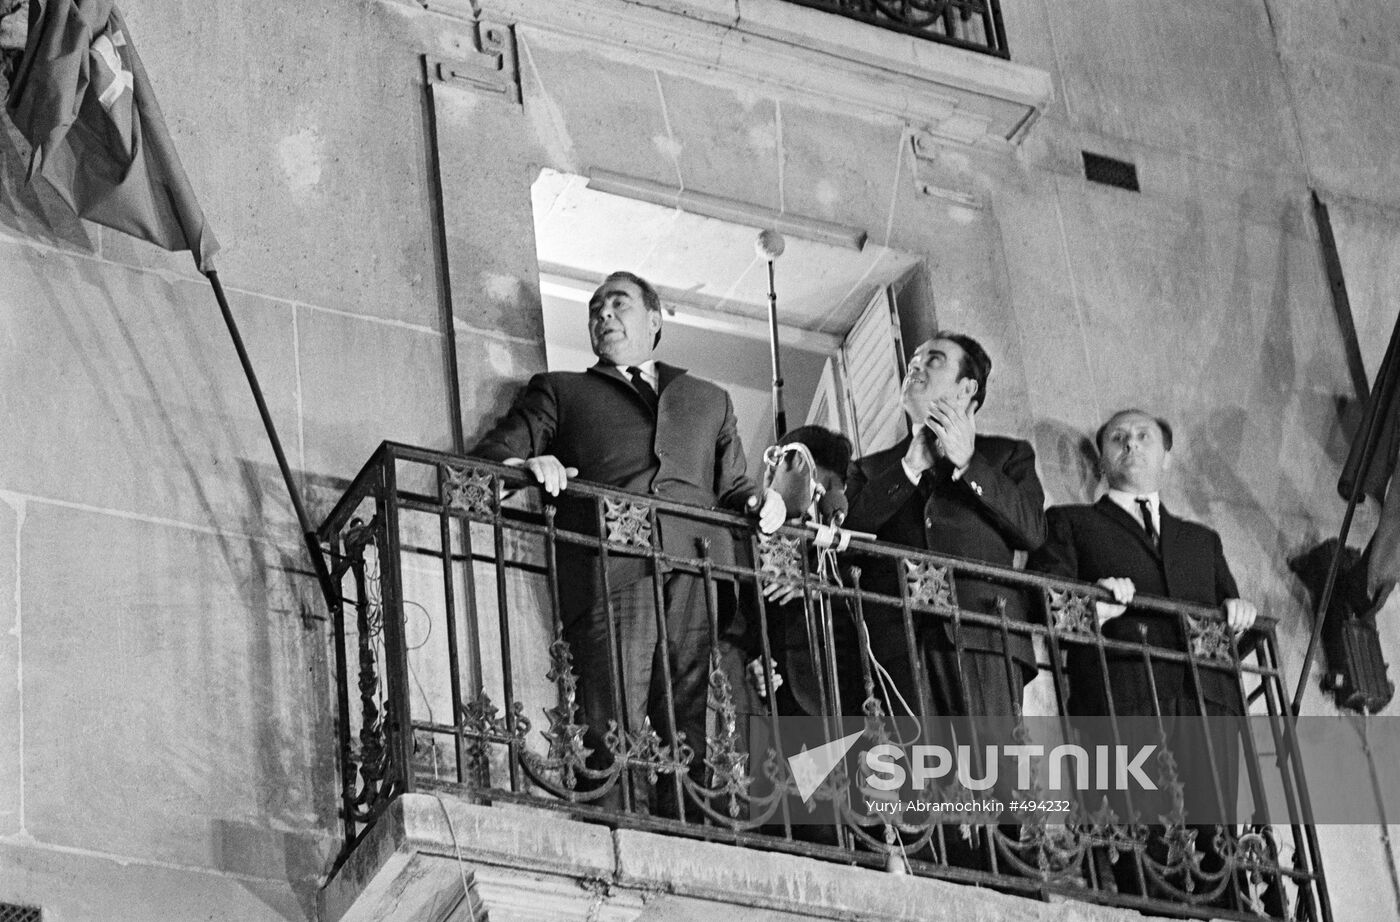 Soviet leader Leonid Brezhnev visits Paris